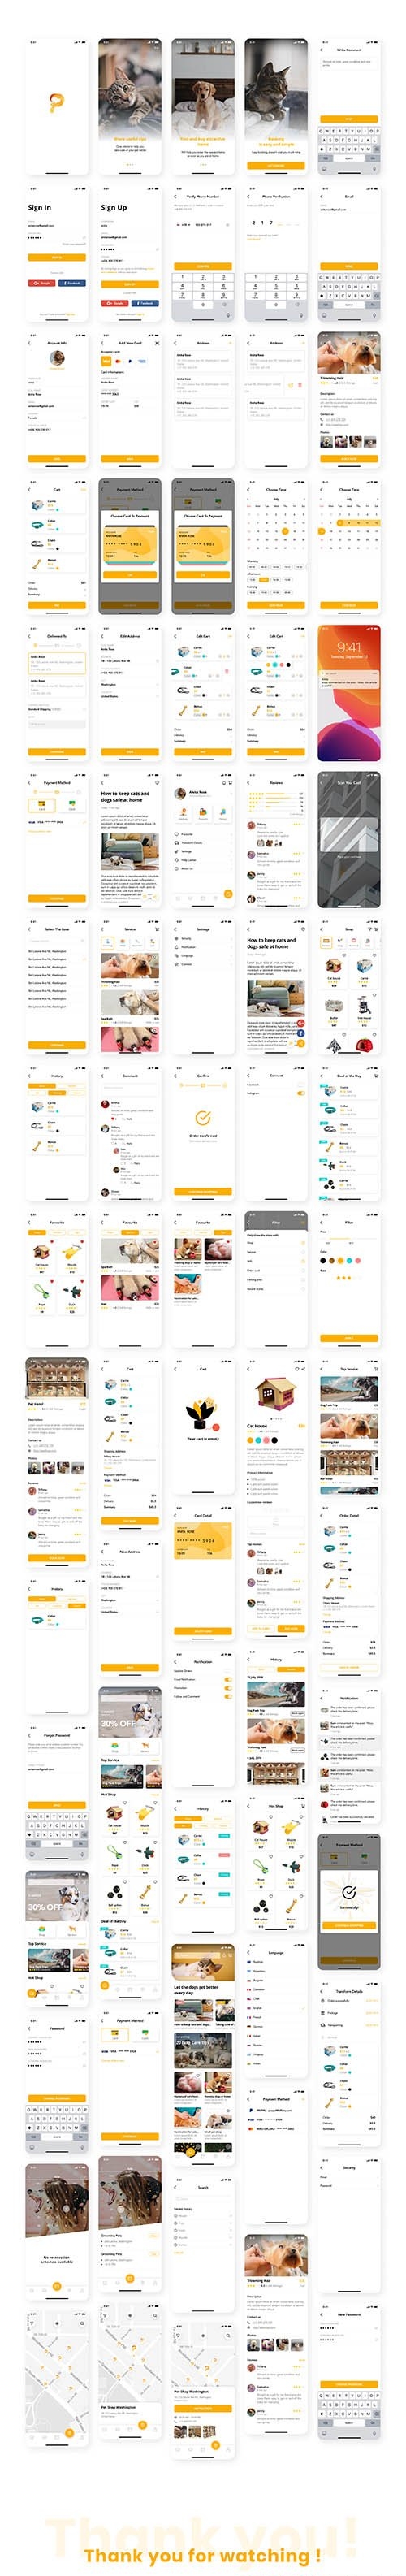 Pedoz - Pet Service App UI Kit